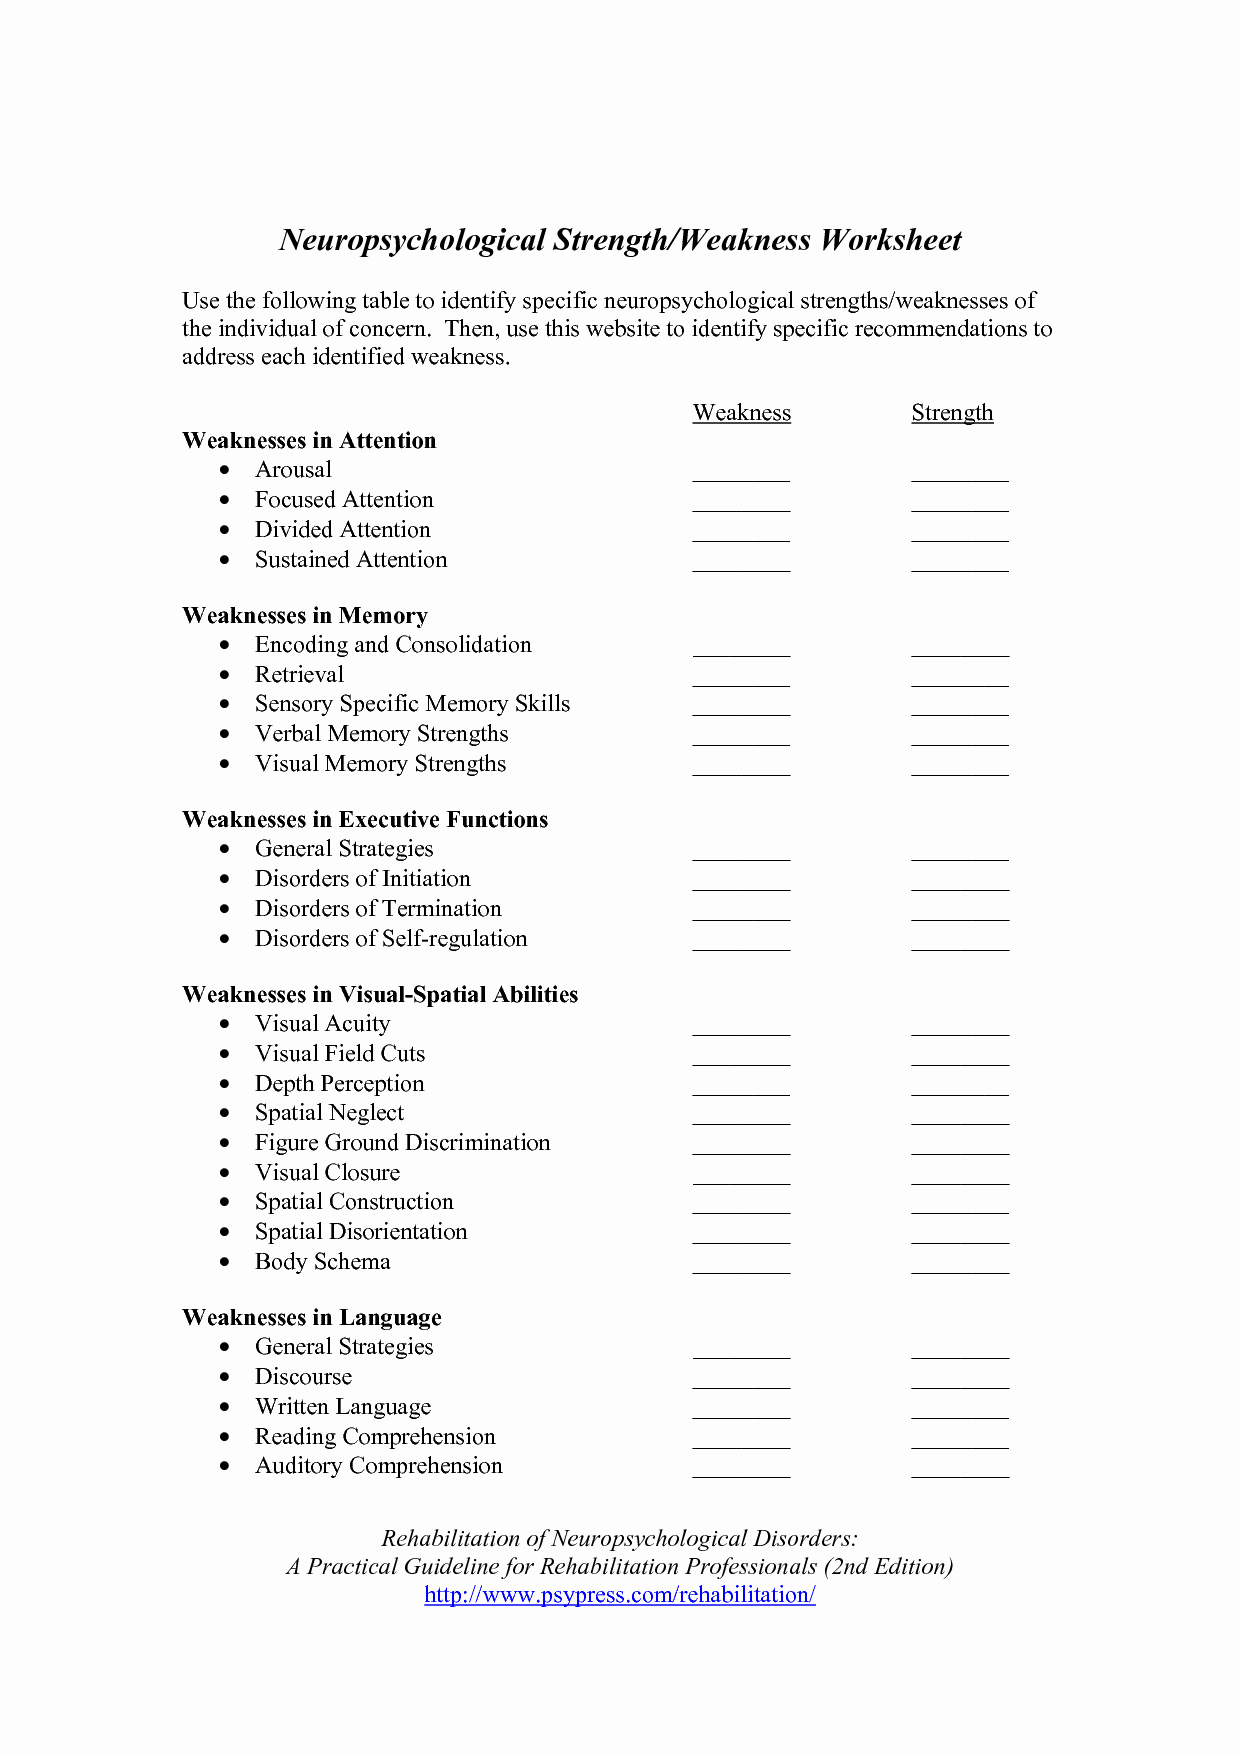 Evaluating Functions Worksheet Pdf Lovely 15 Best Of Evaluating Functions Worksheets Pdf